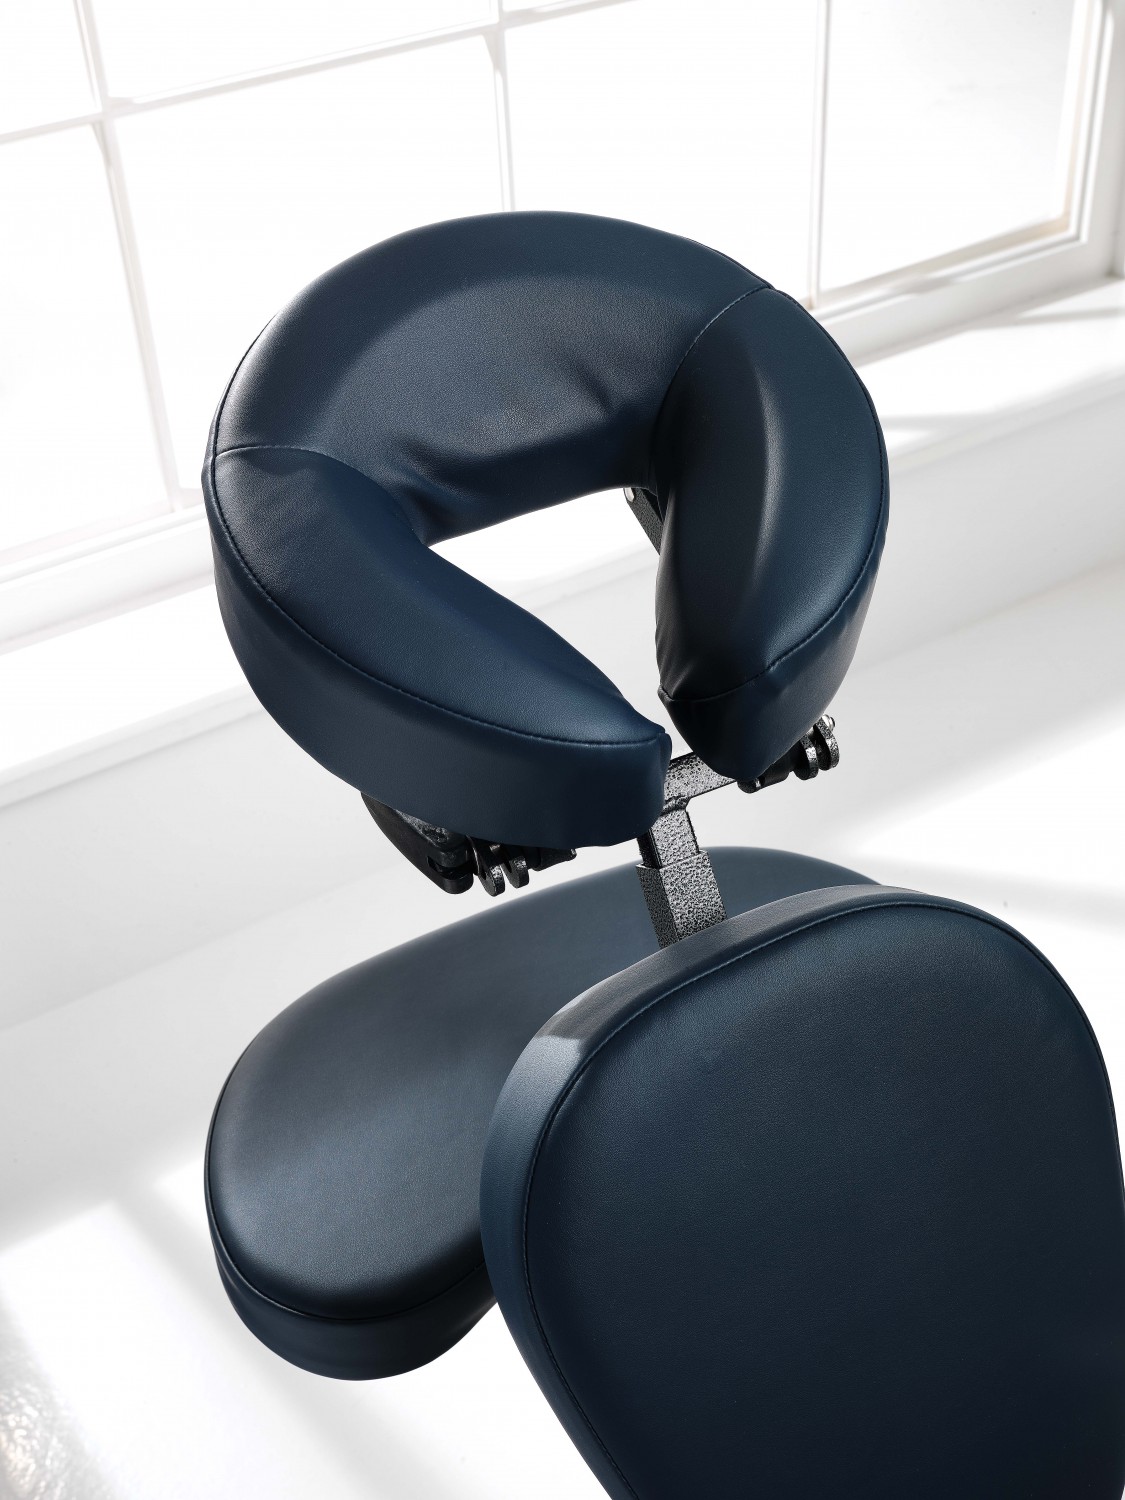  XanitaliaPro Kiro Chair Massage chair 